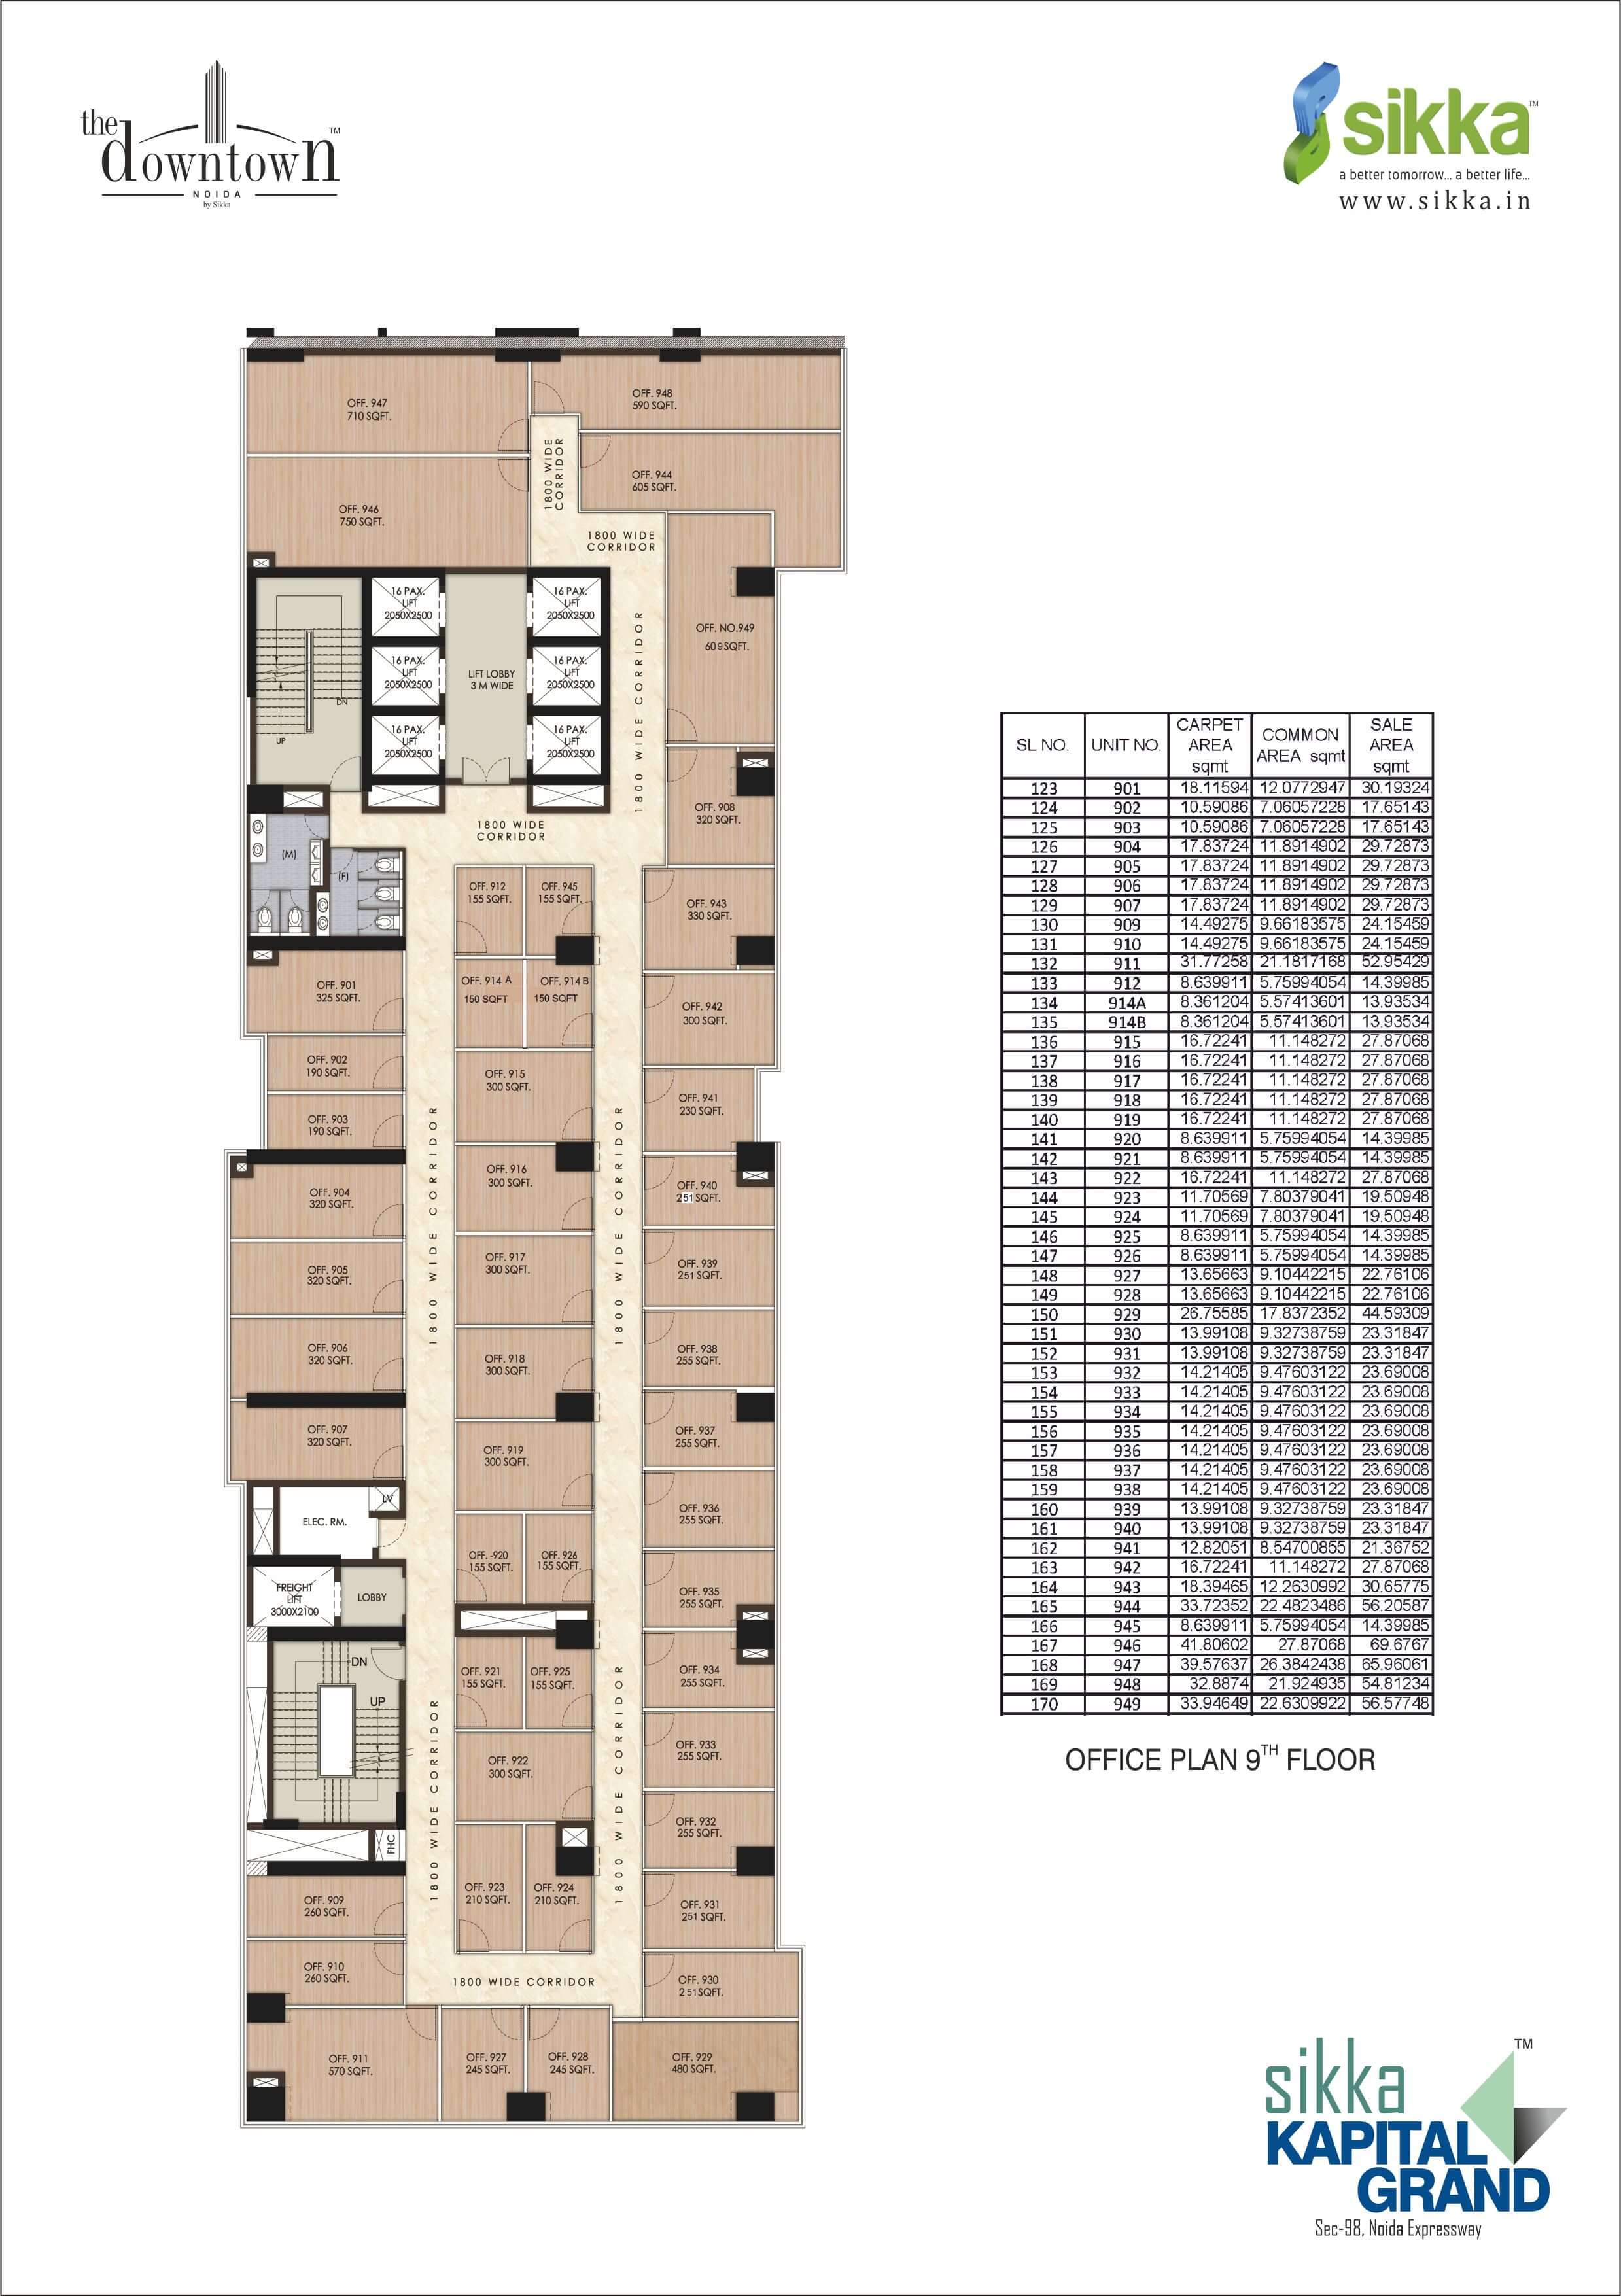 Kapital Grand - Office Plan 9th Floor